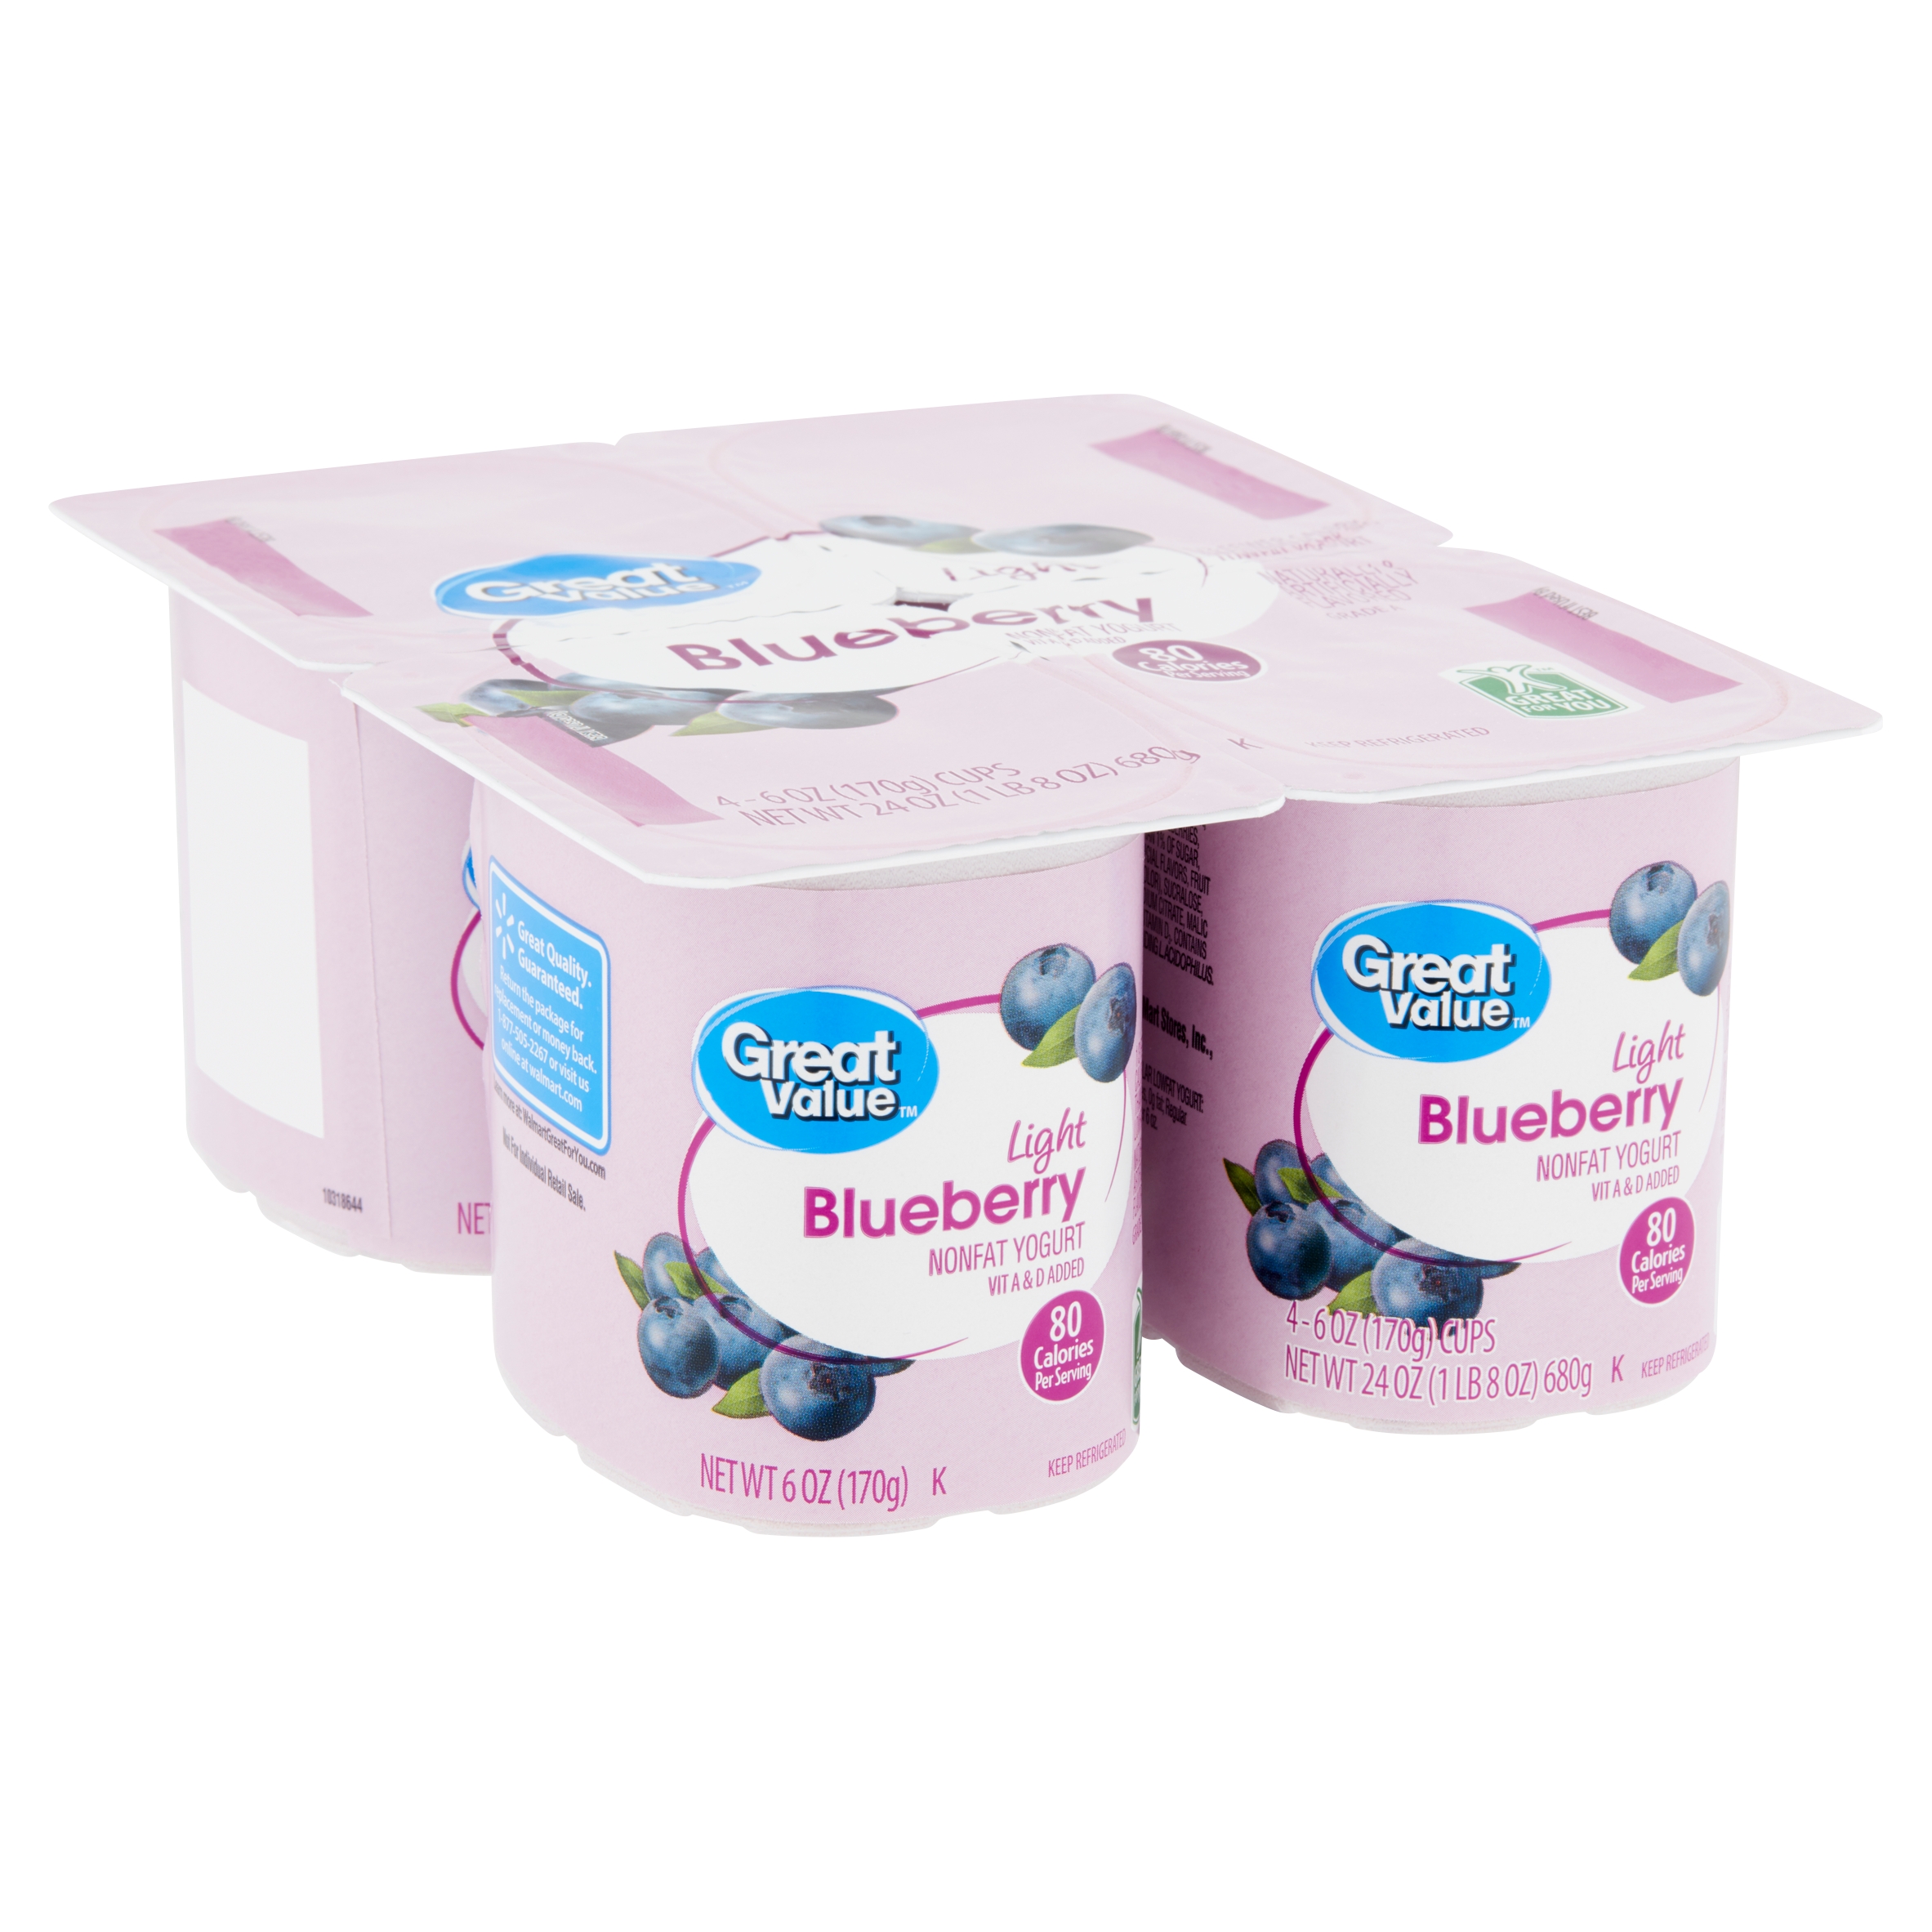 Great Value Light Blueberry Nonfat Yogurt, 6 Oz, 4 Count Image